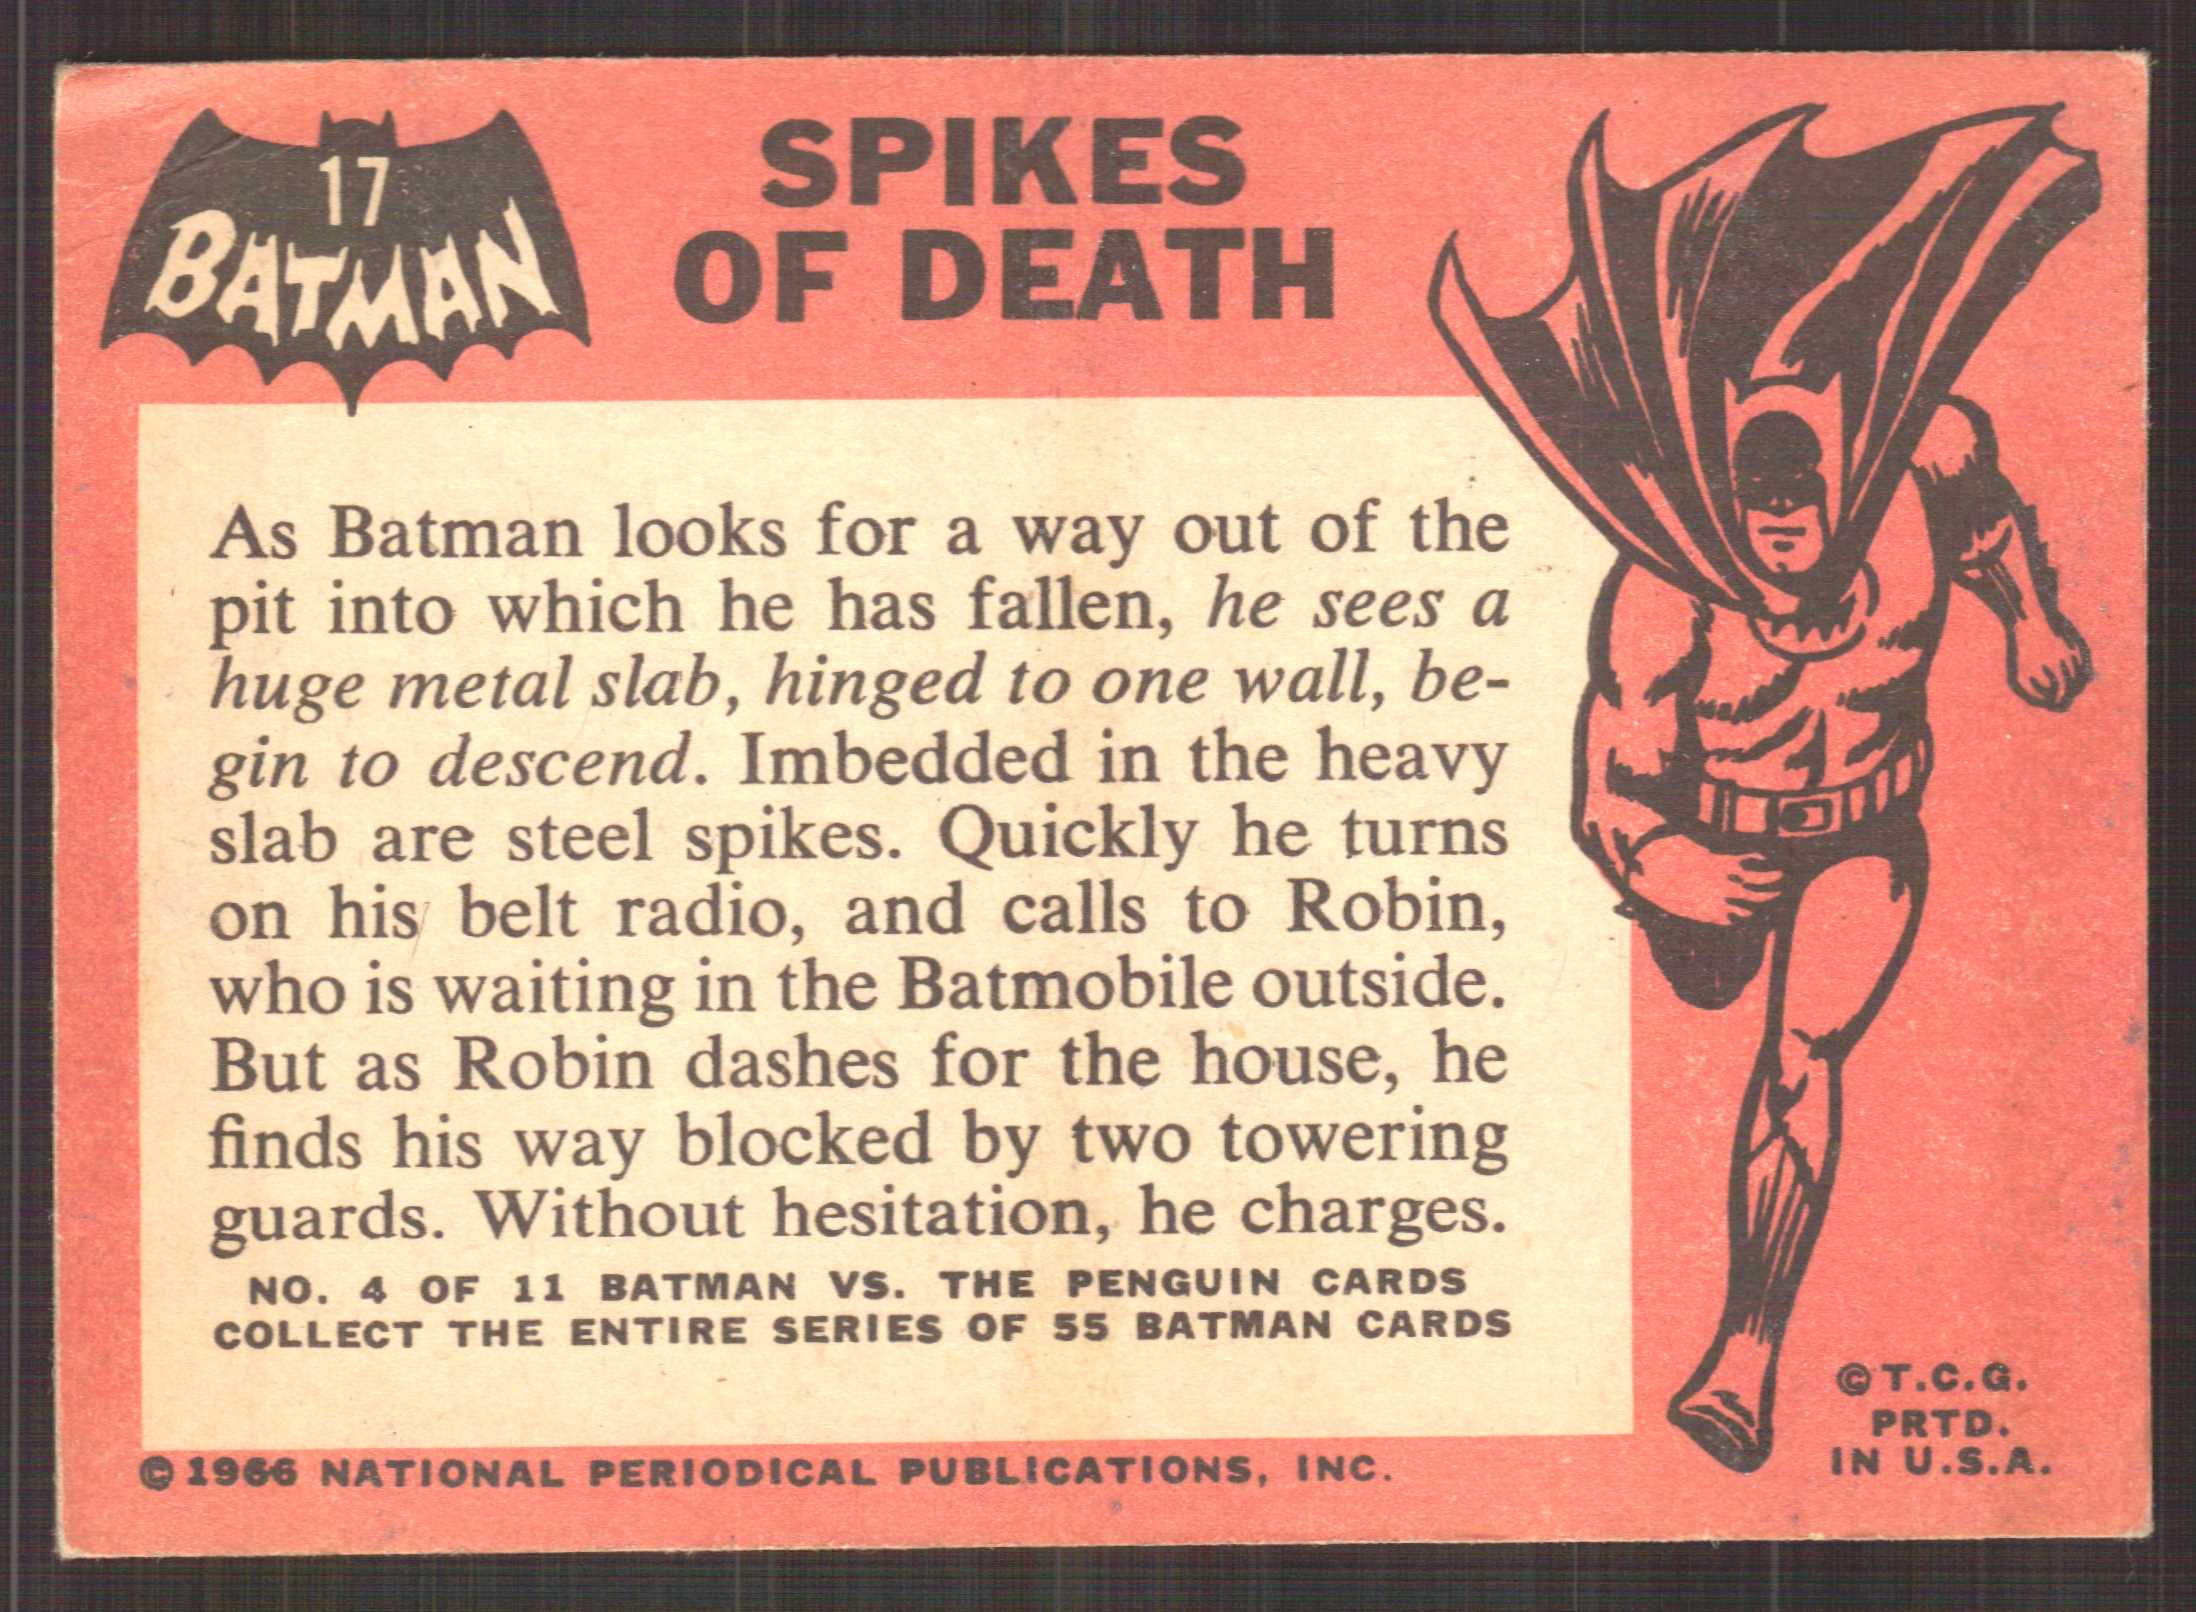 1966 Topps Batman Black Bat #17 Spikes of Death back image